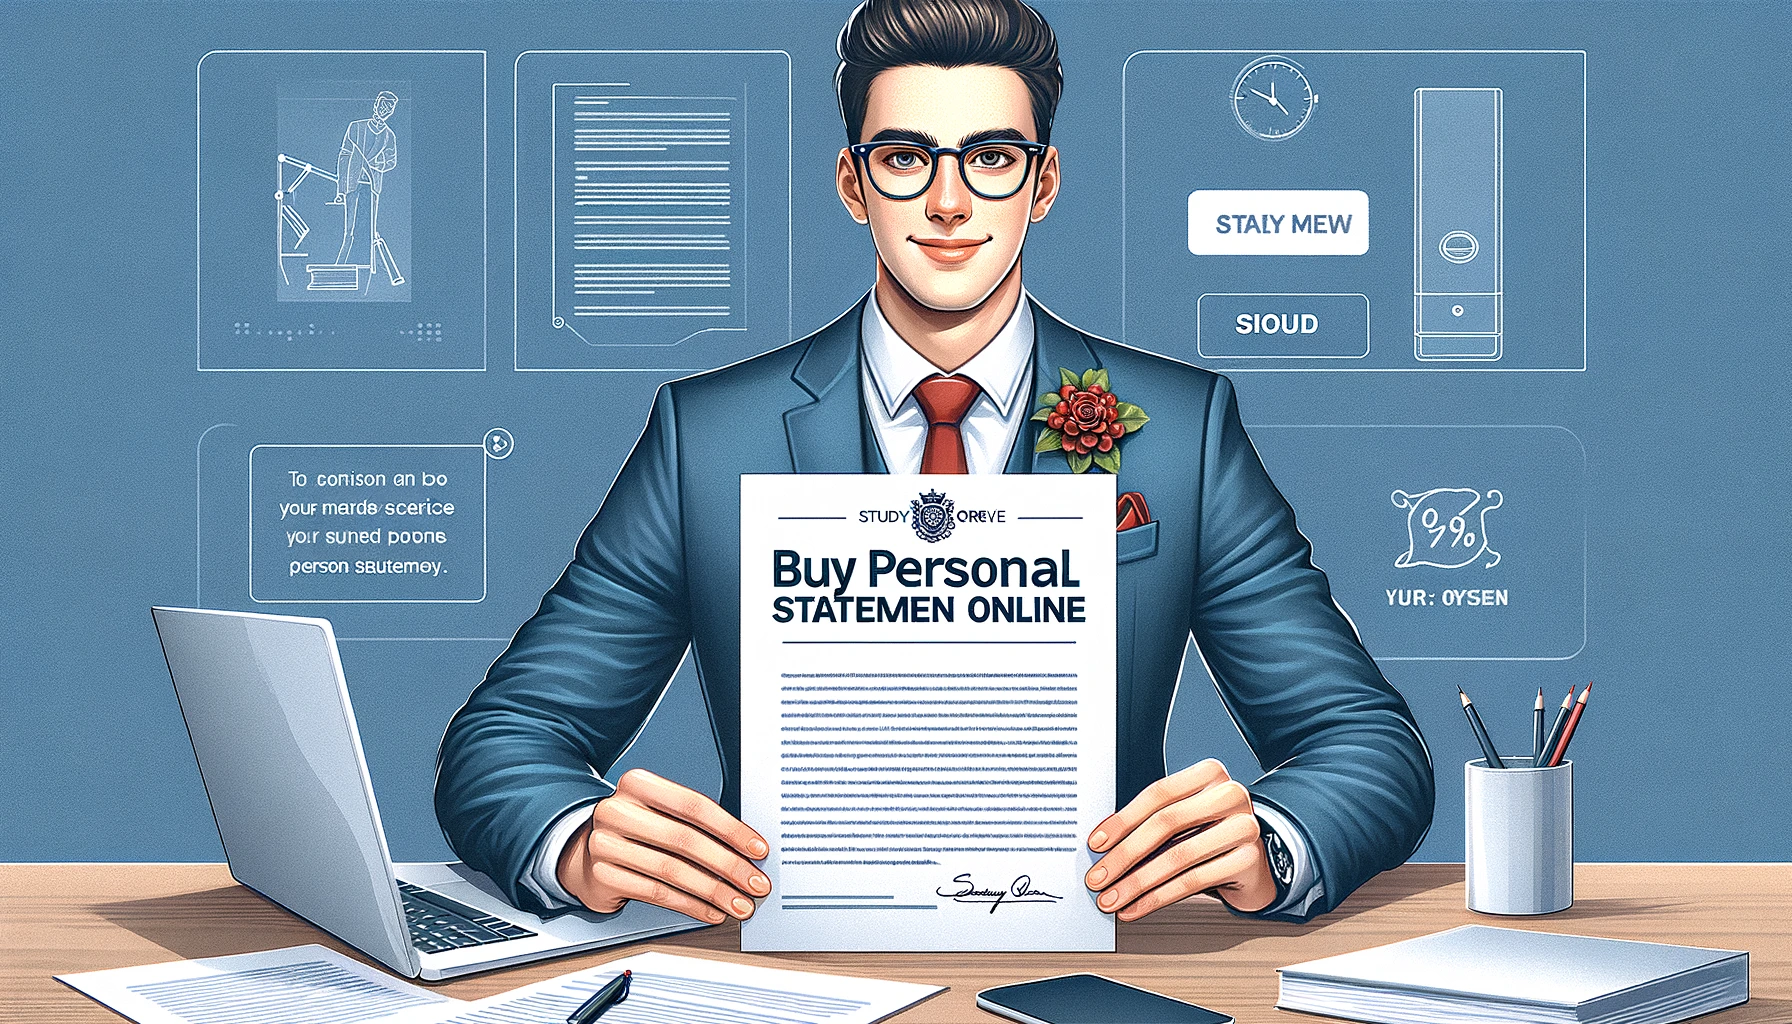 Buy Personal Statement Online